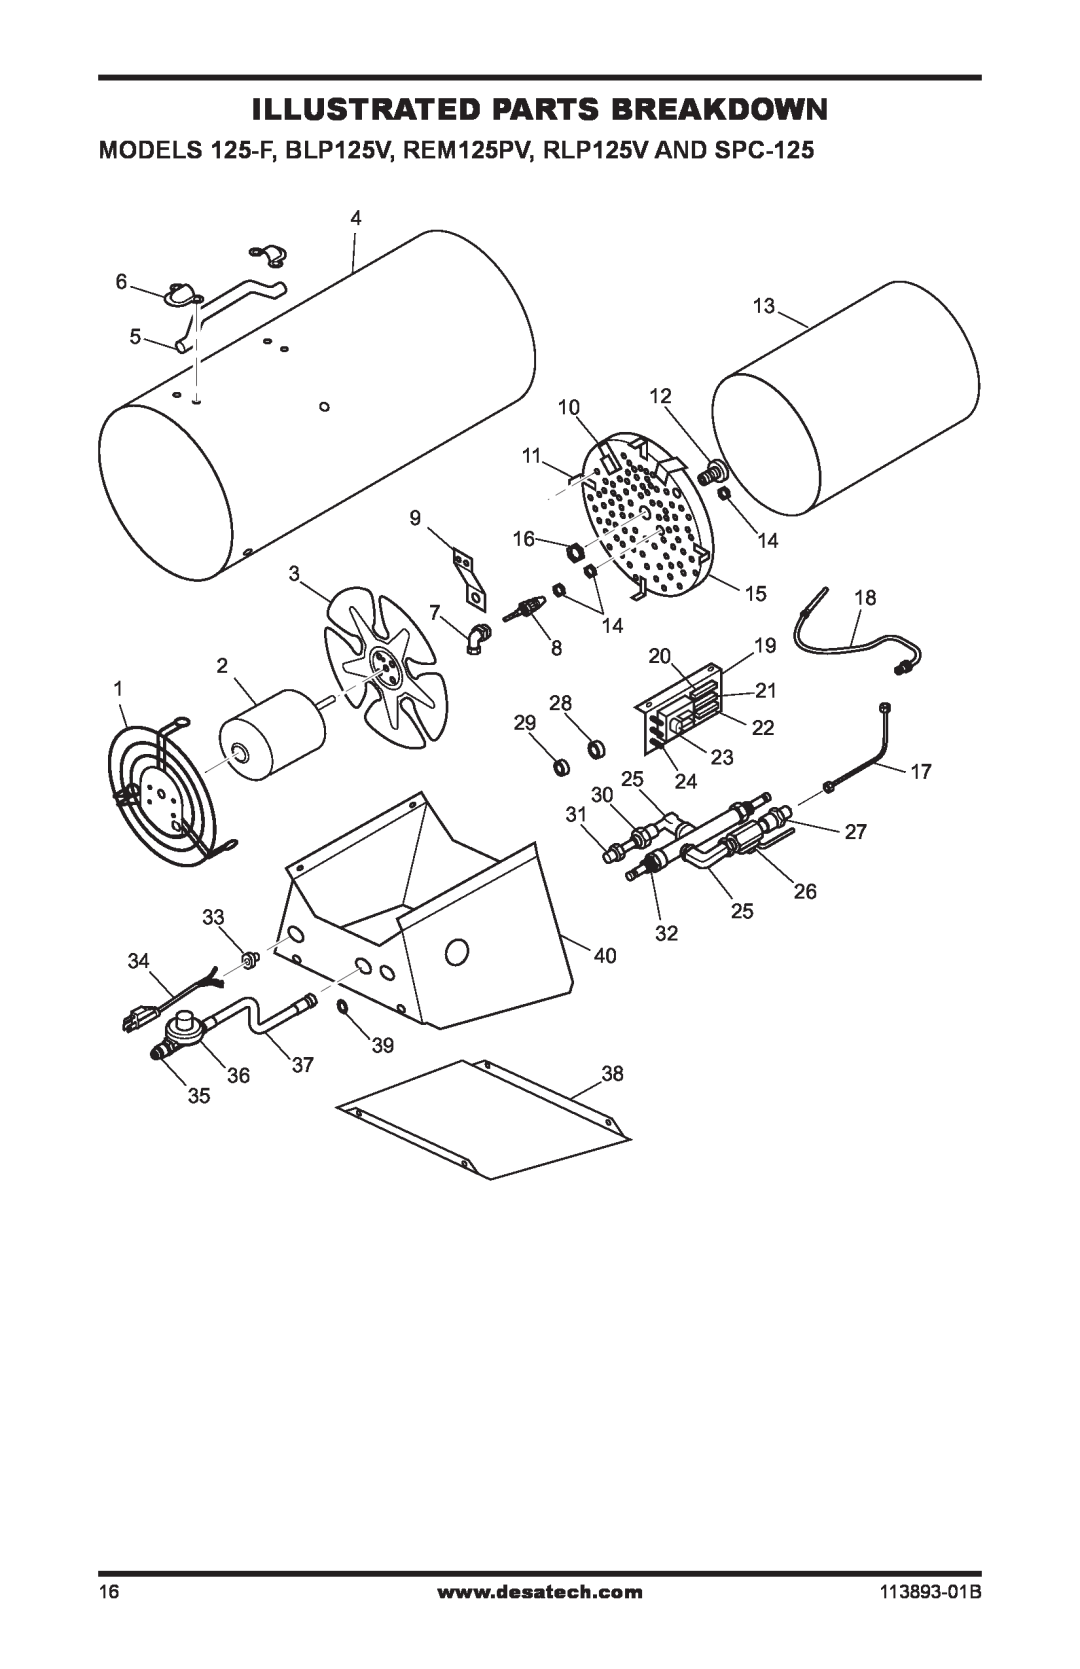 Desa Air Conditioner owner manual Illustrated Parts Breakdown 